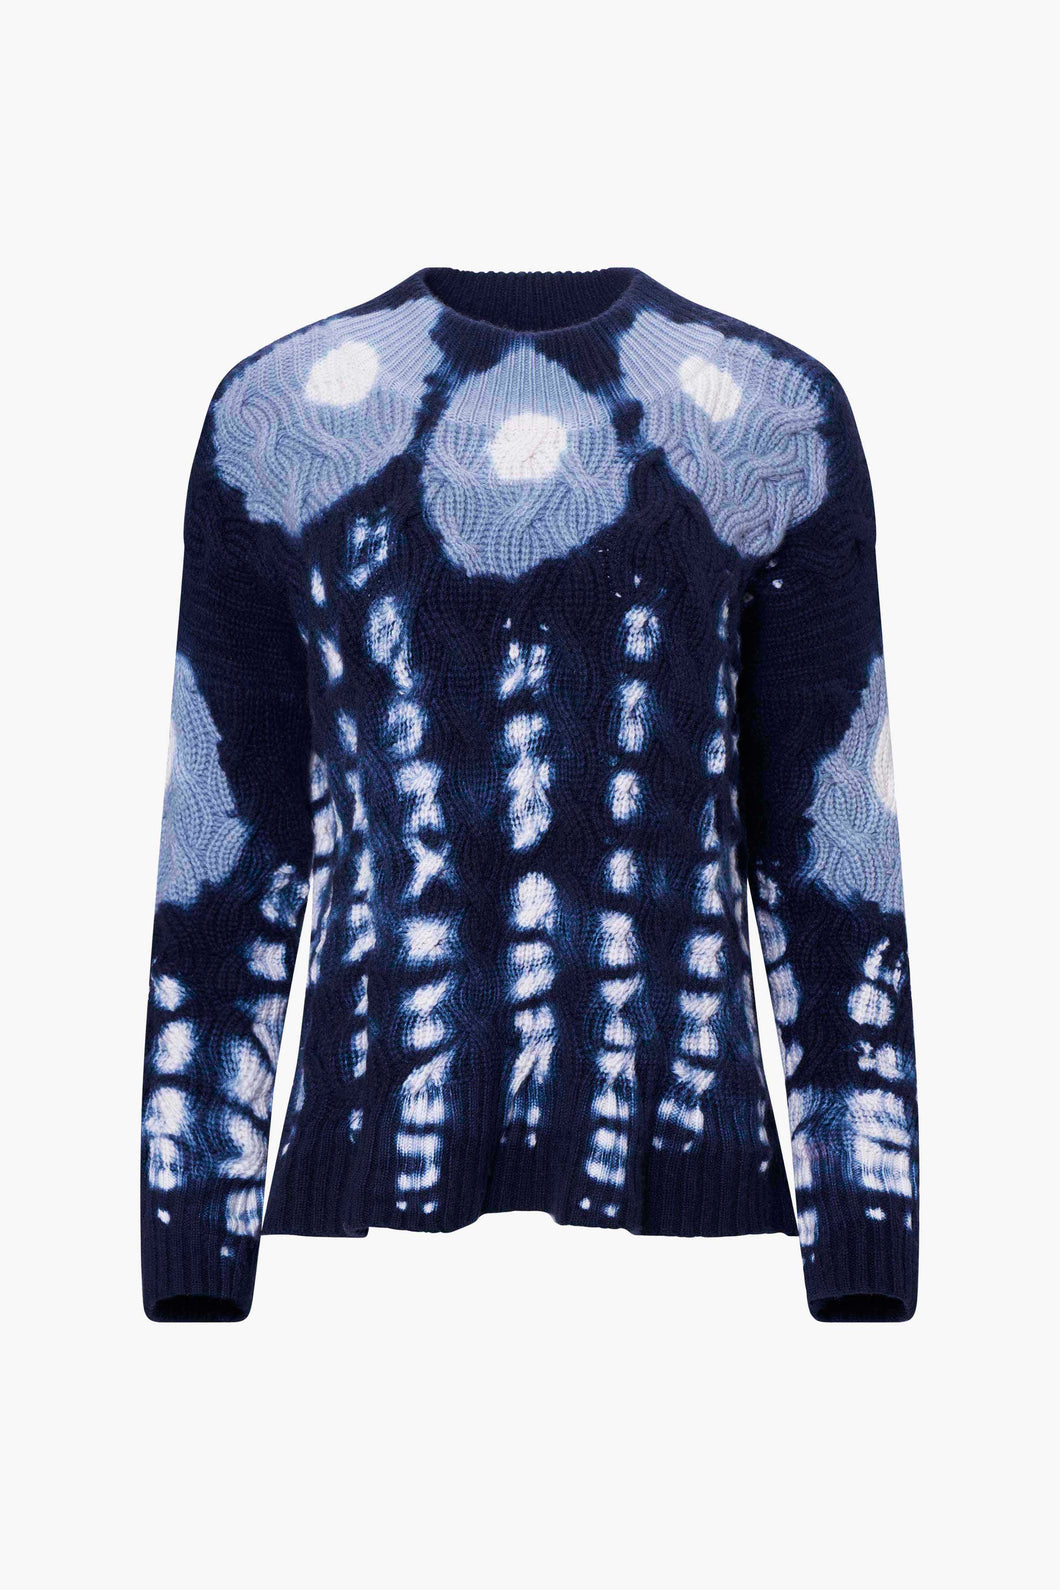 Fall Winter 22 'Lagune' Sweater